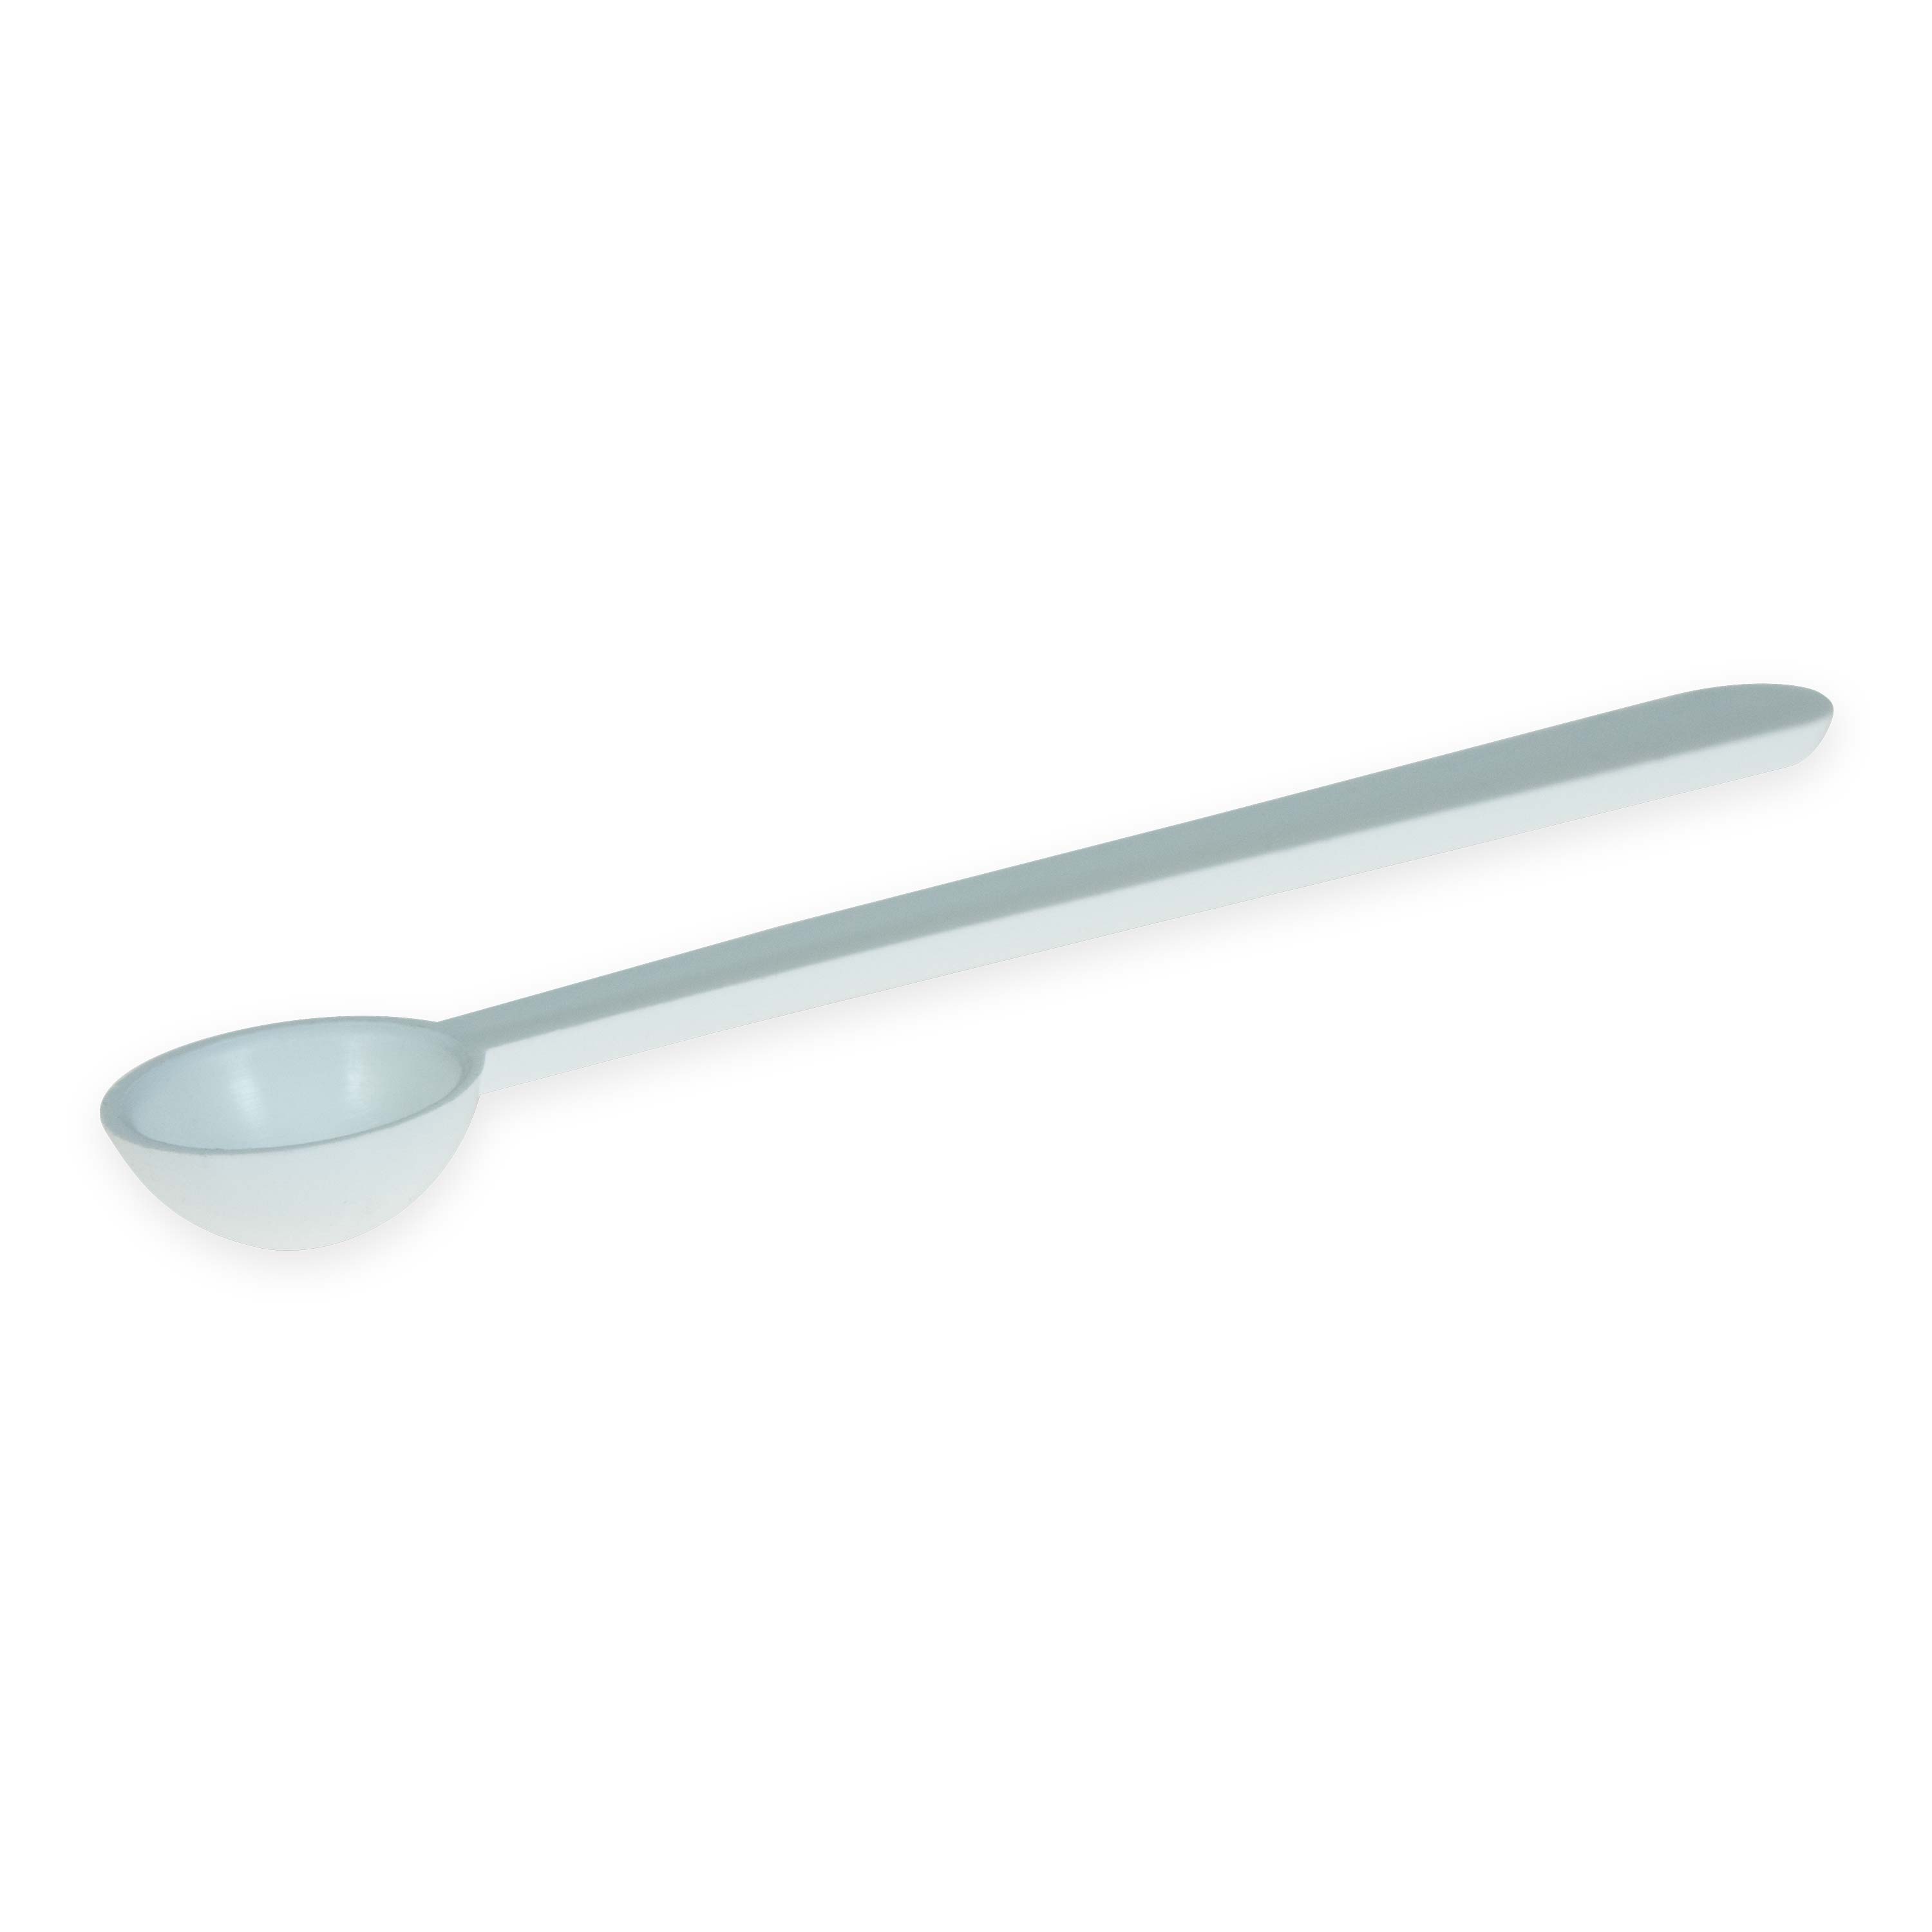 Measuring spoon 0.3 ml